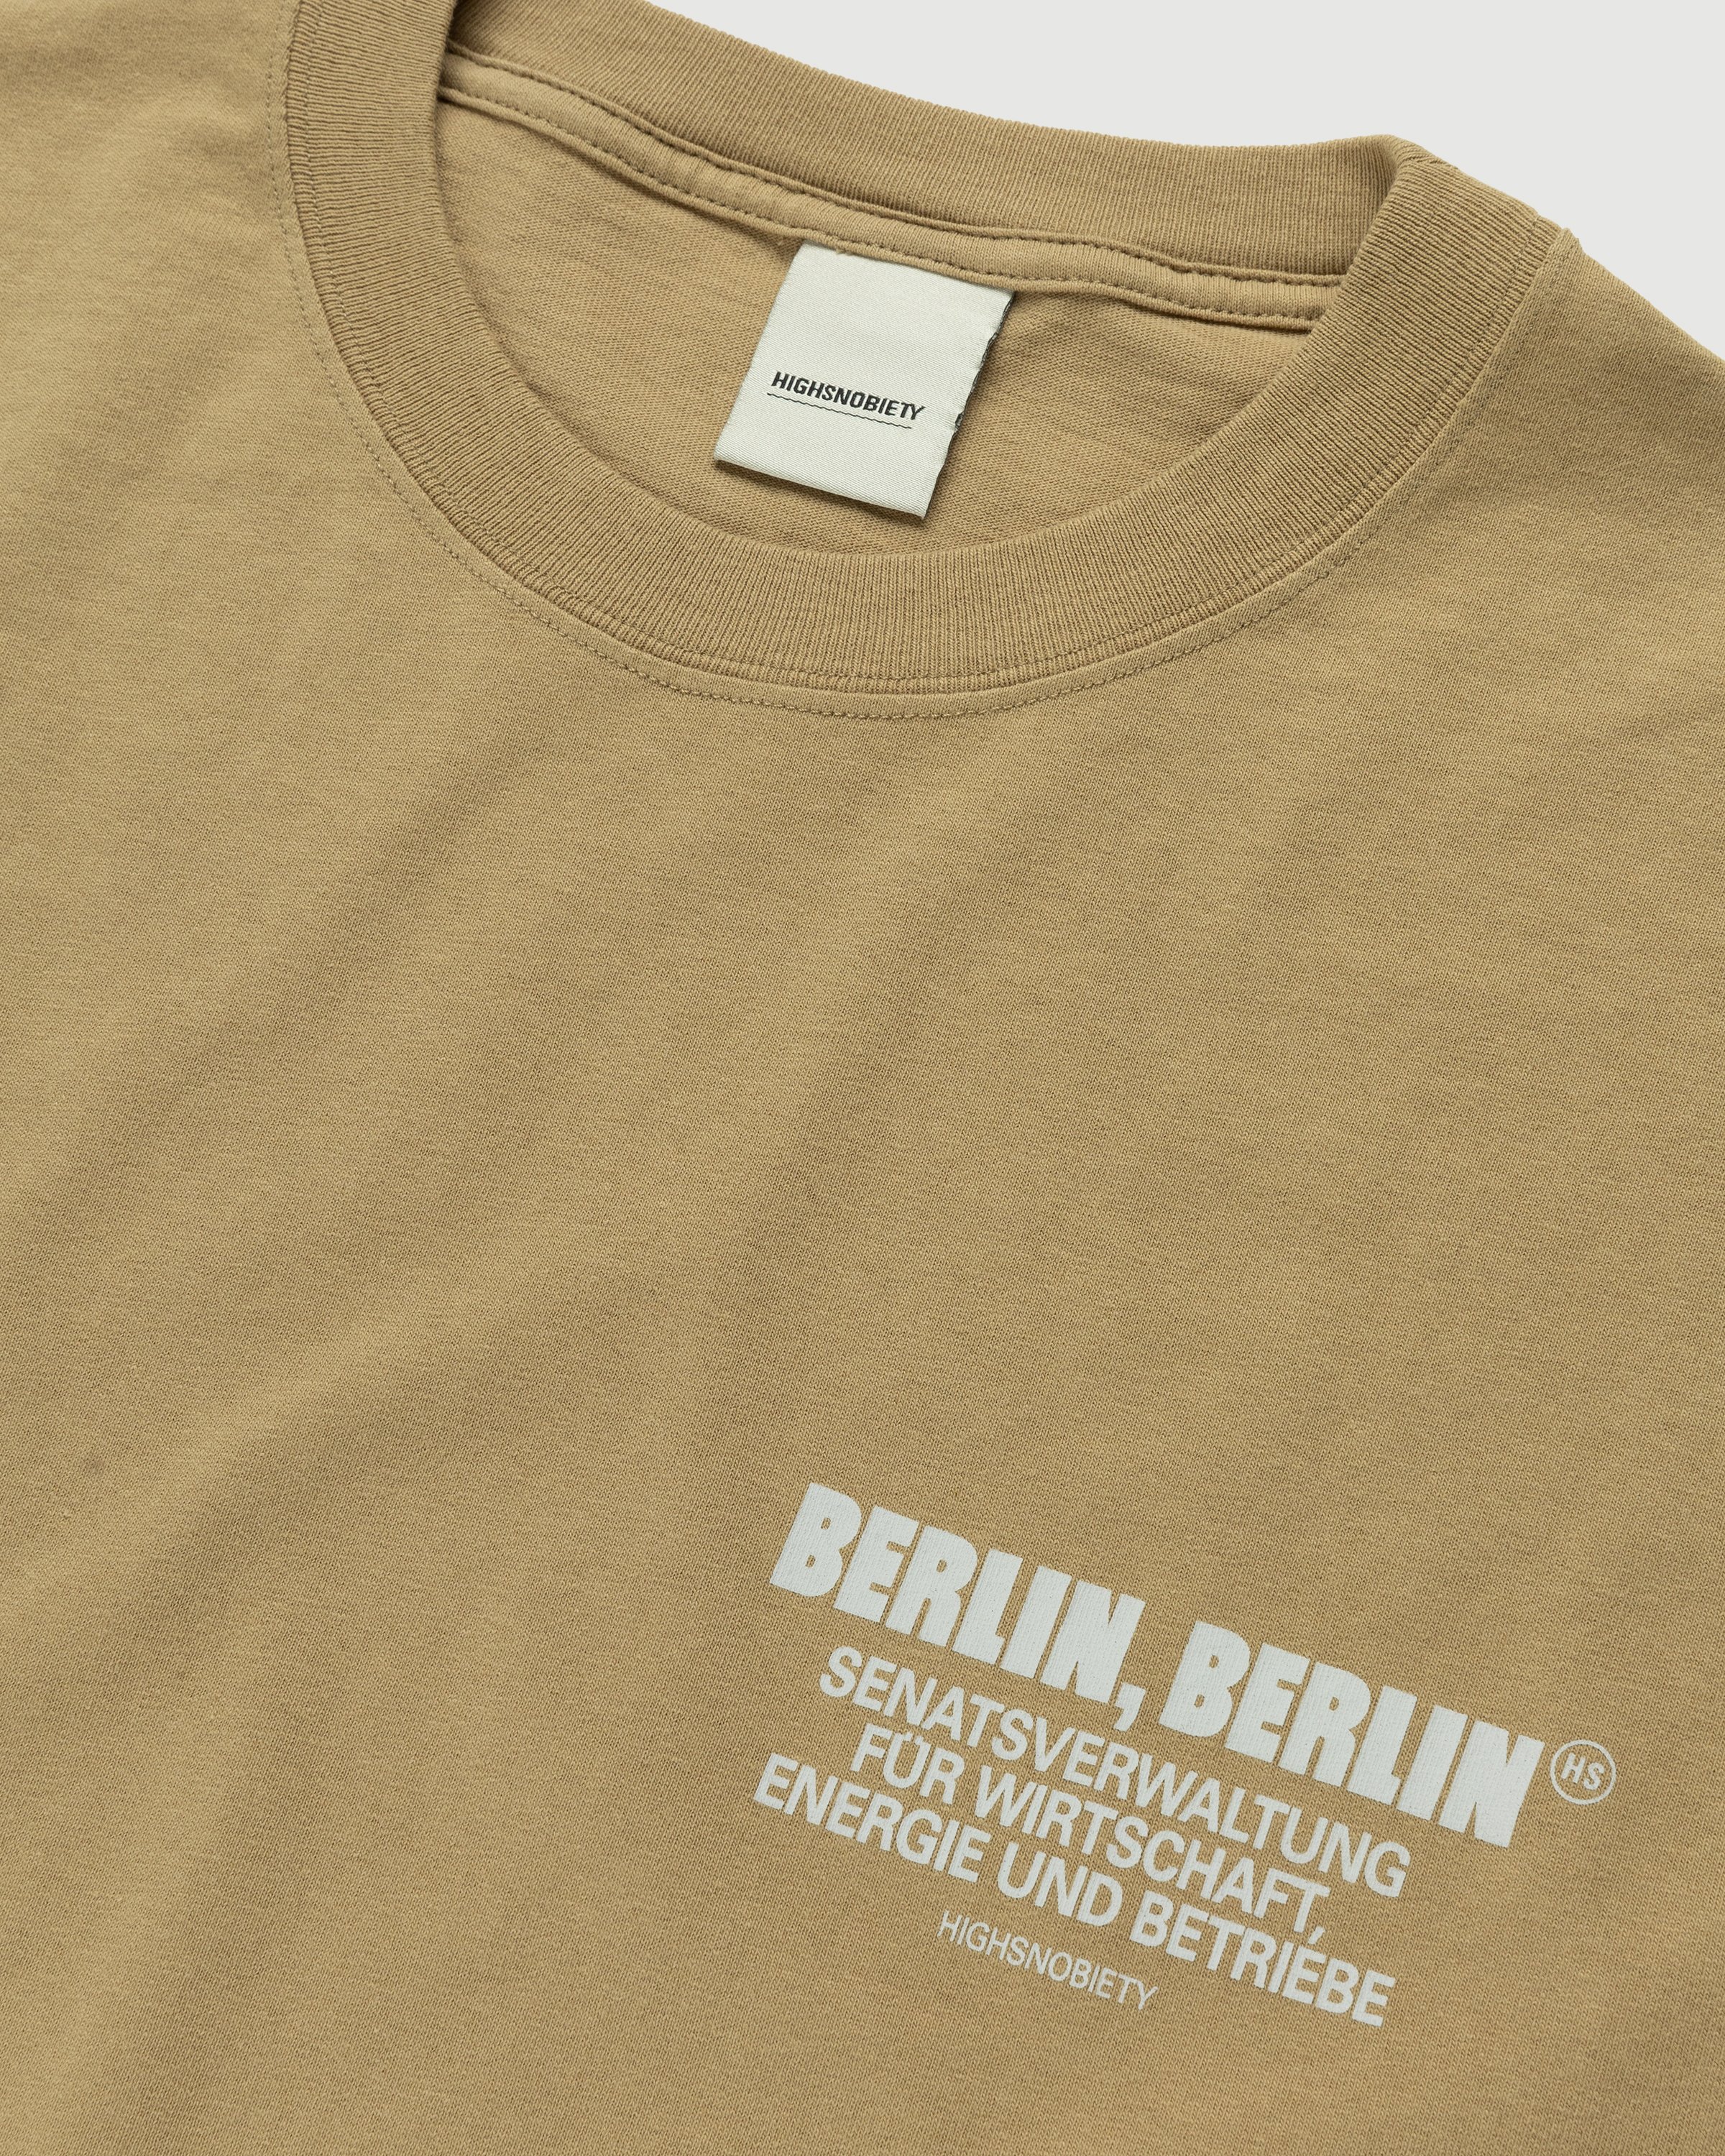 Highsnobiety - BERLIN, BERLIN 3 T-Shirt Military Green - Clothing - Beige - Image 4